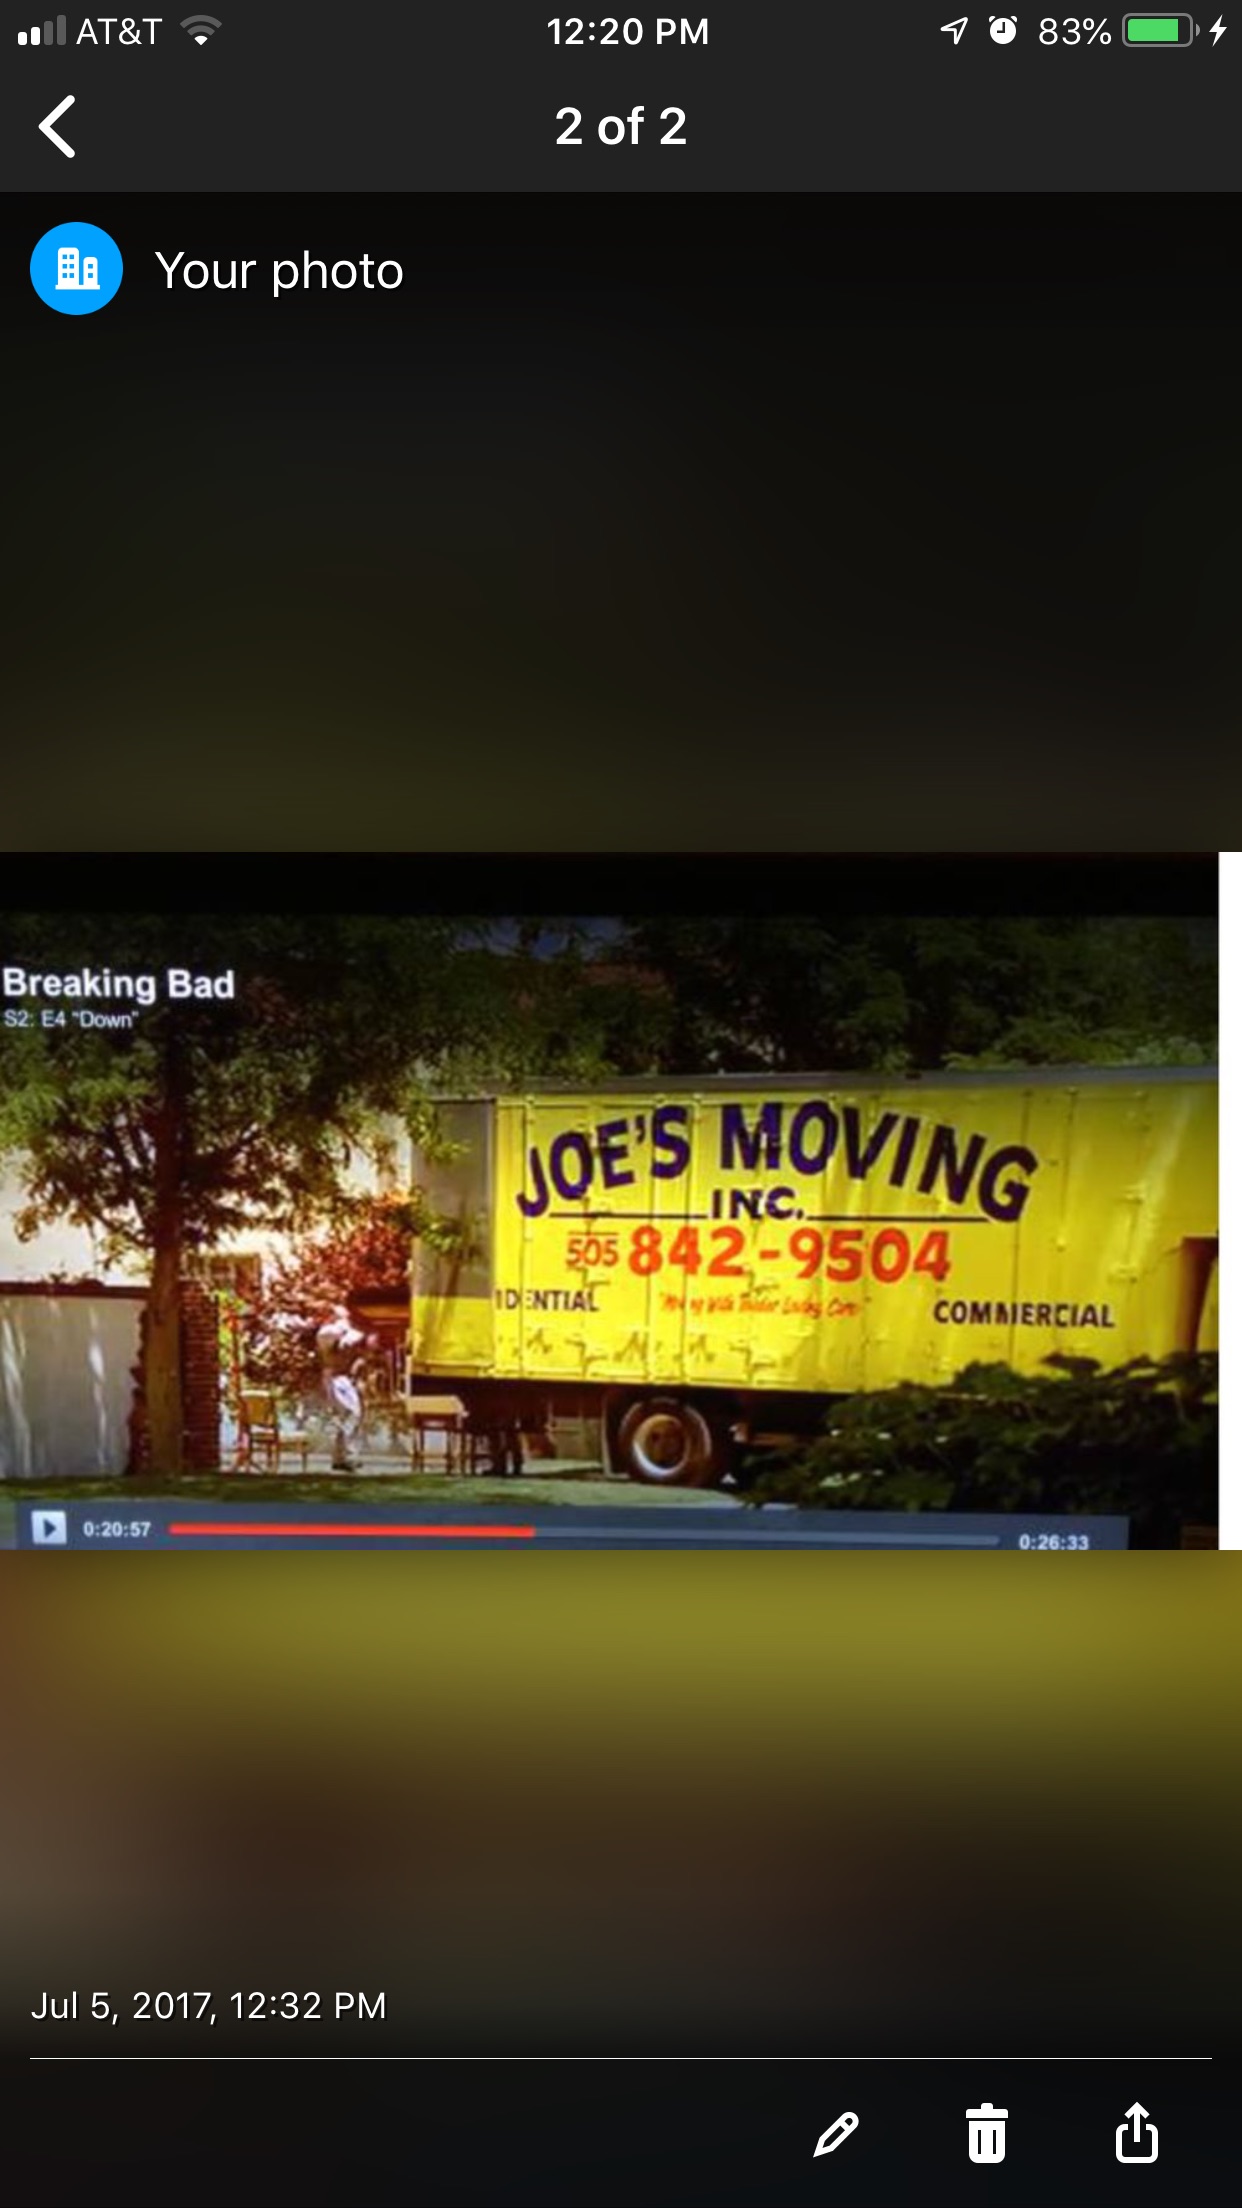 Joe’s Moving